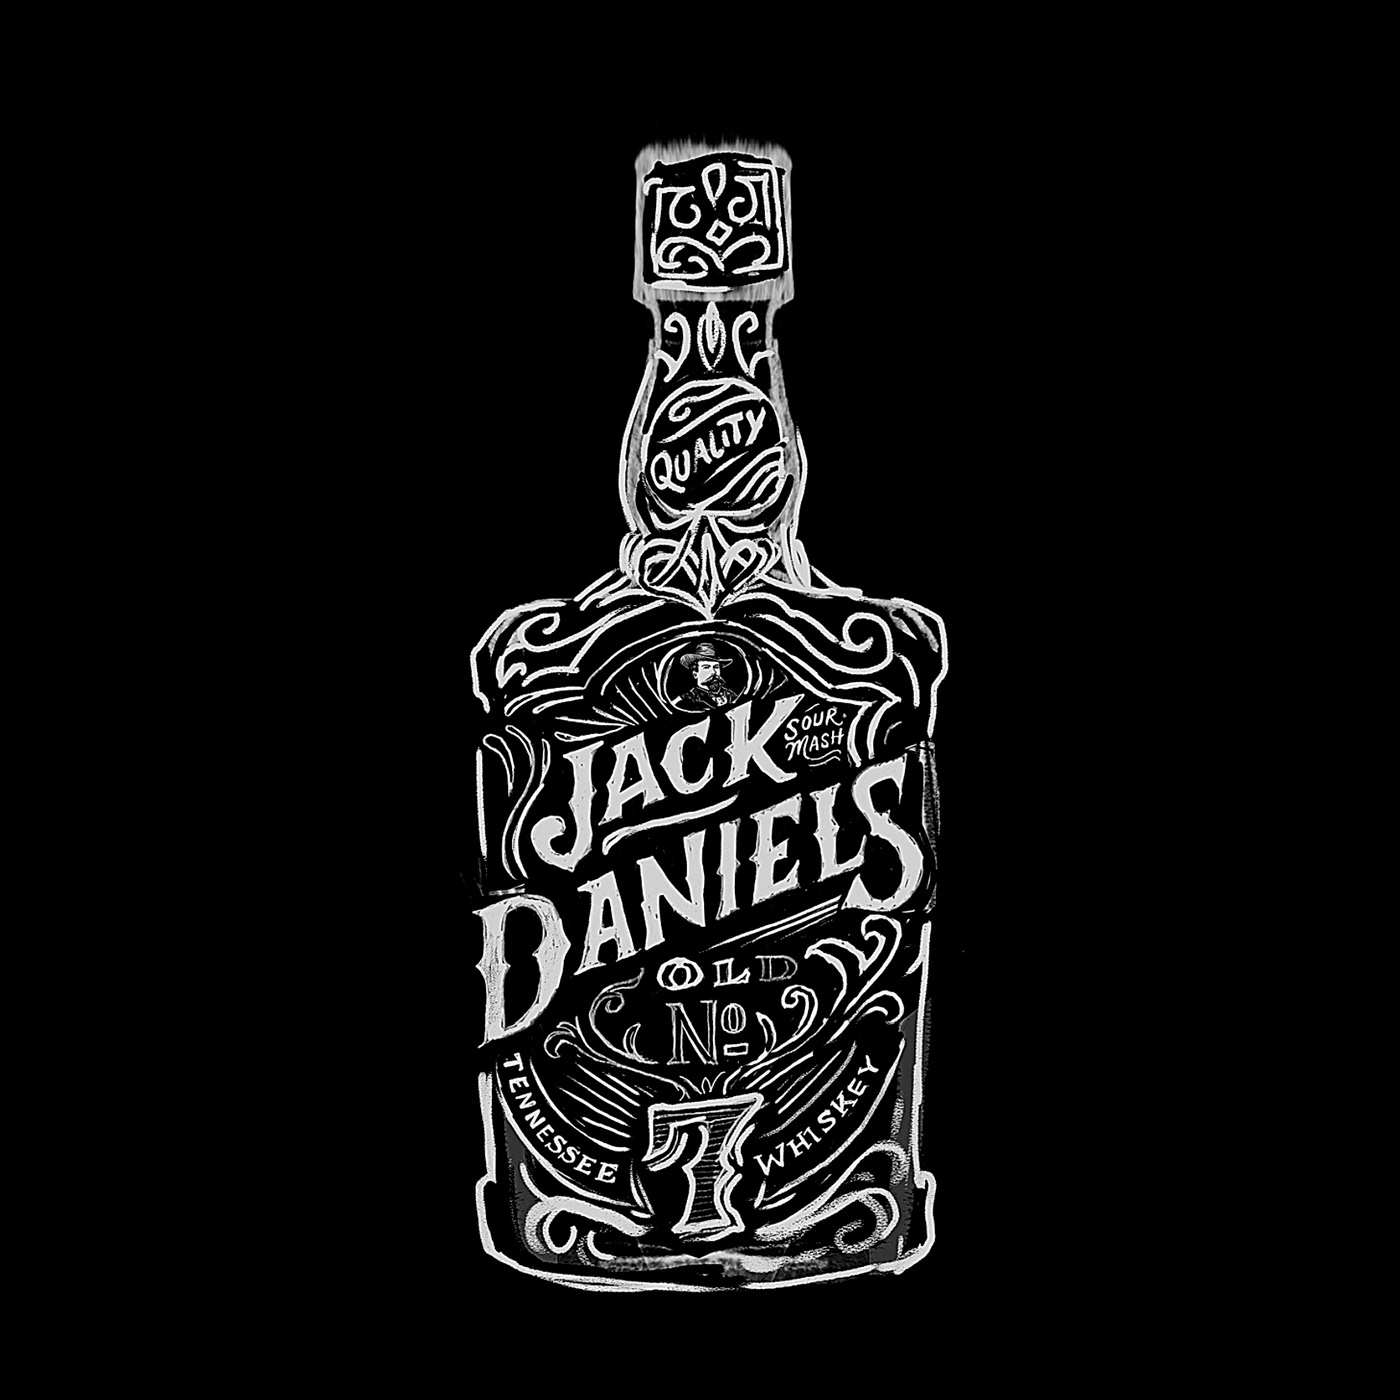 lucky brand jack daniels Whiskey Tennessee branding  Fashion  design art ILLUSTRATION  vintage